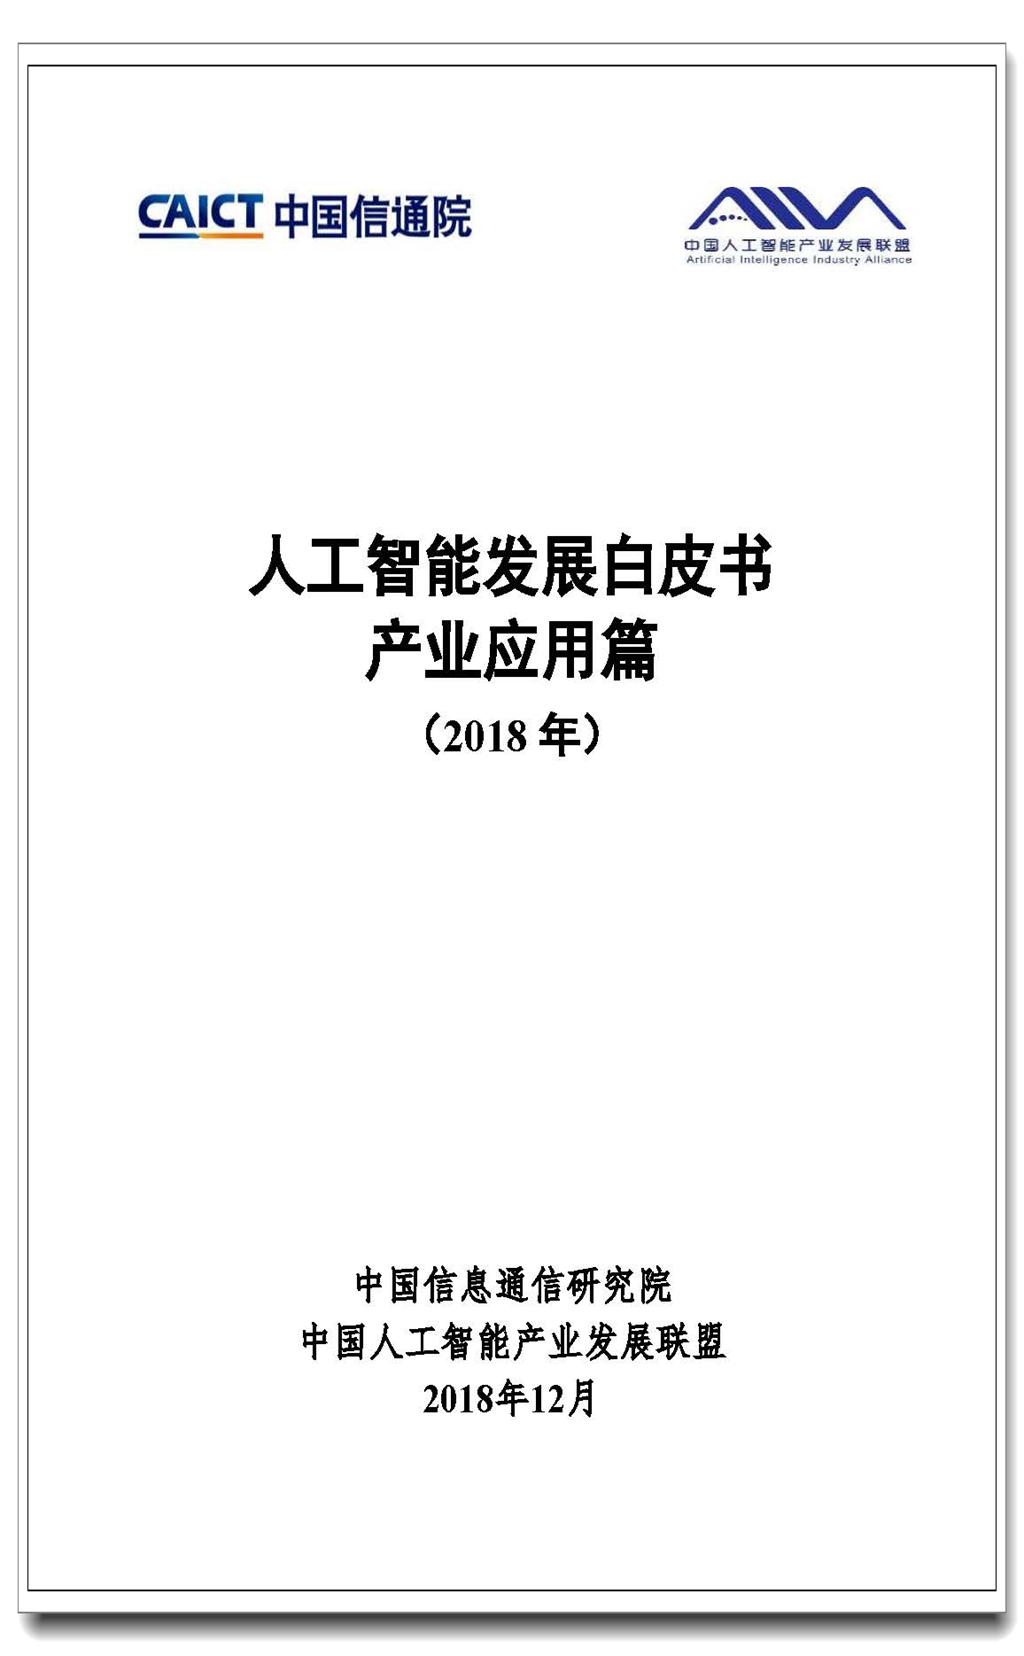 Pages from 人工智能发展白皮书-产业应用篇-无水印.jpg